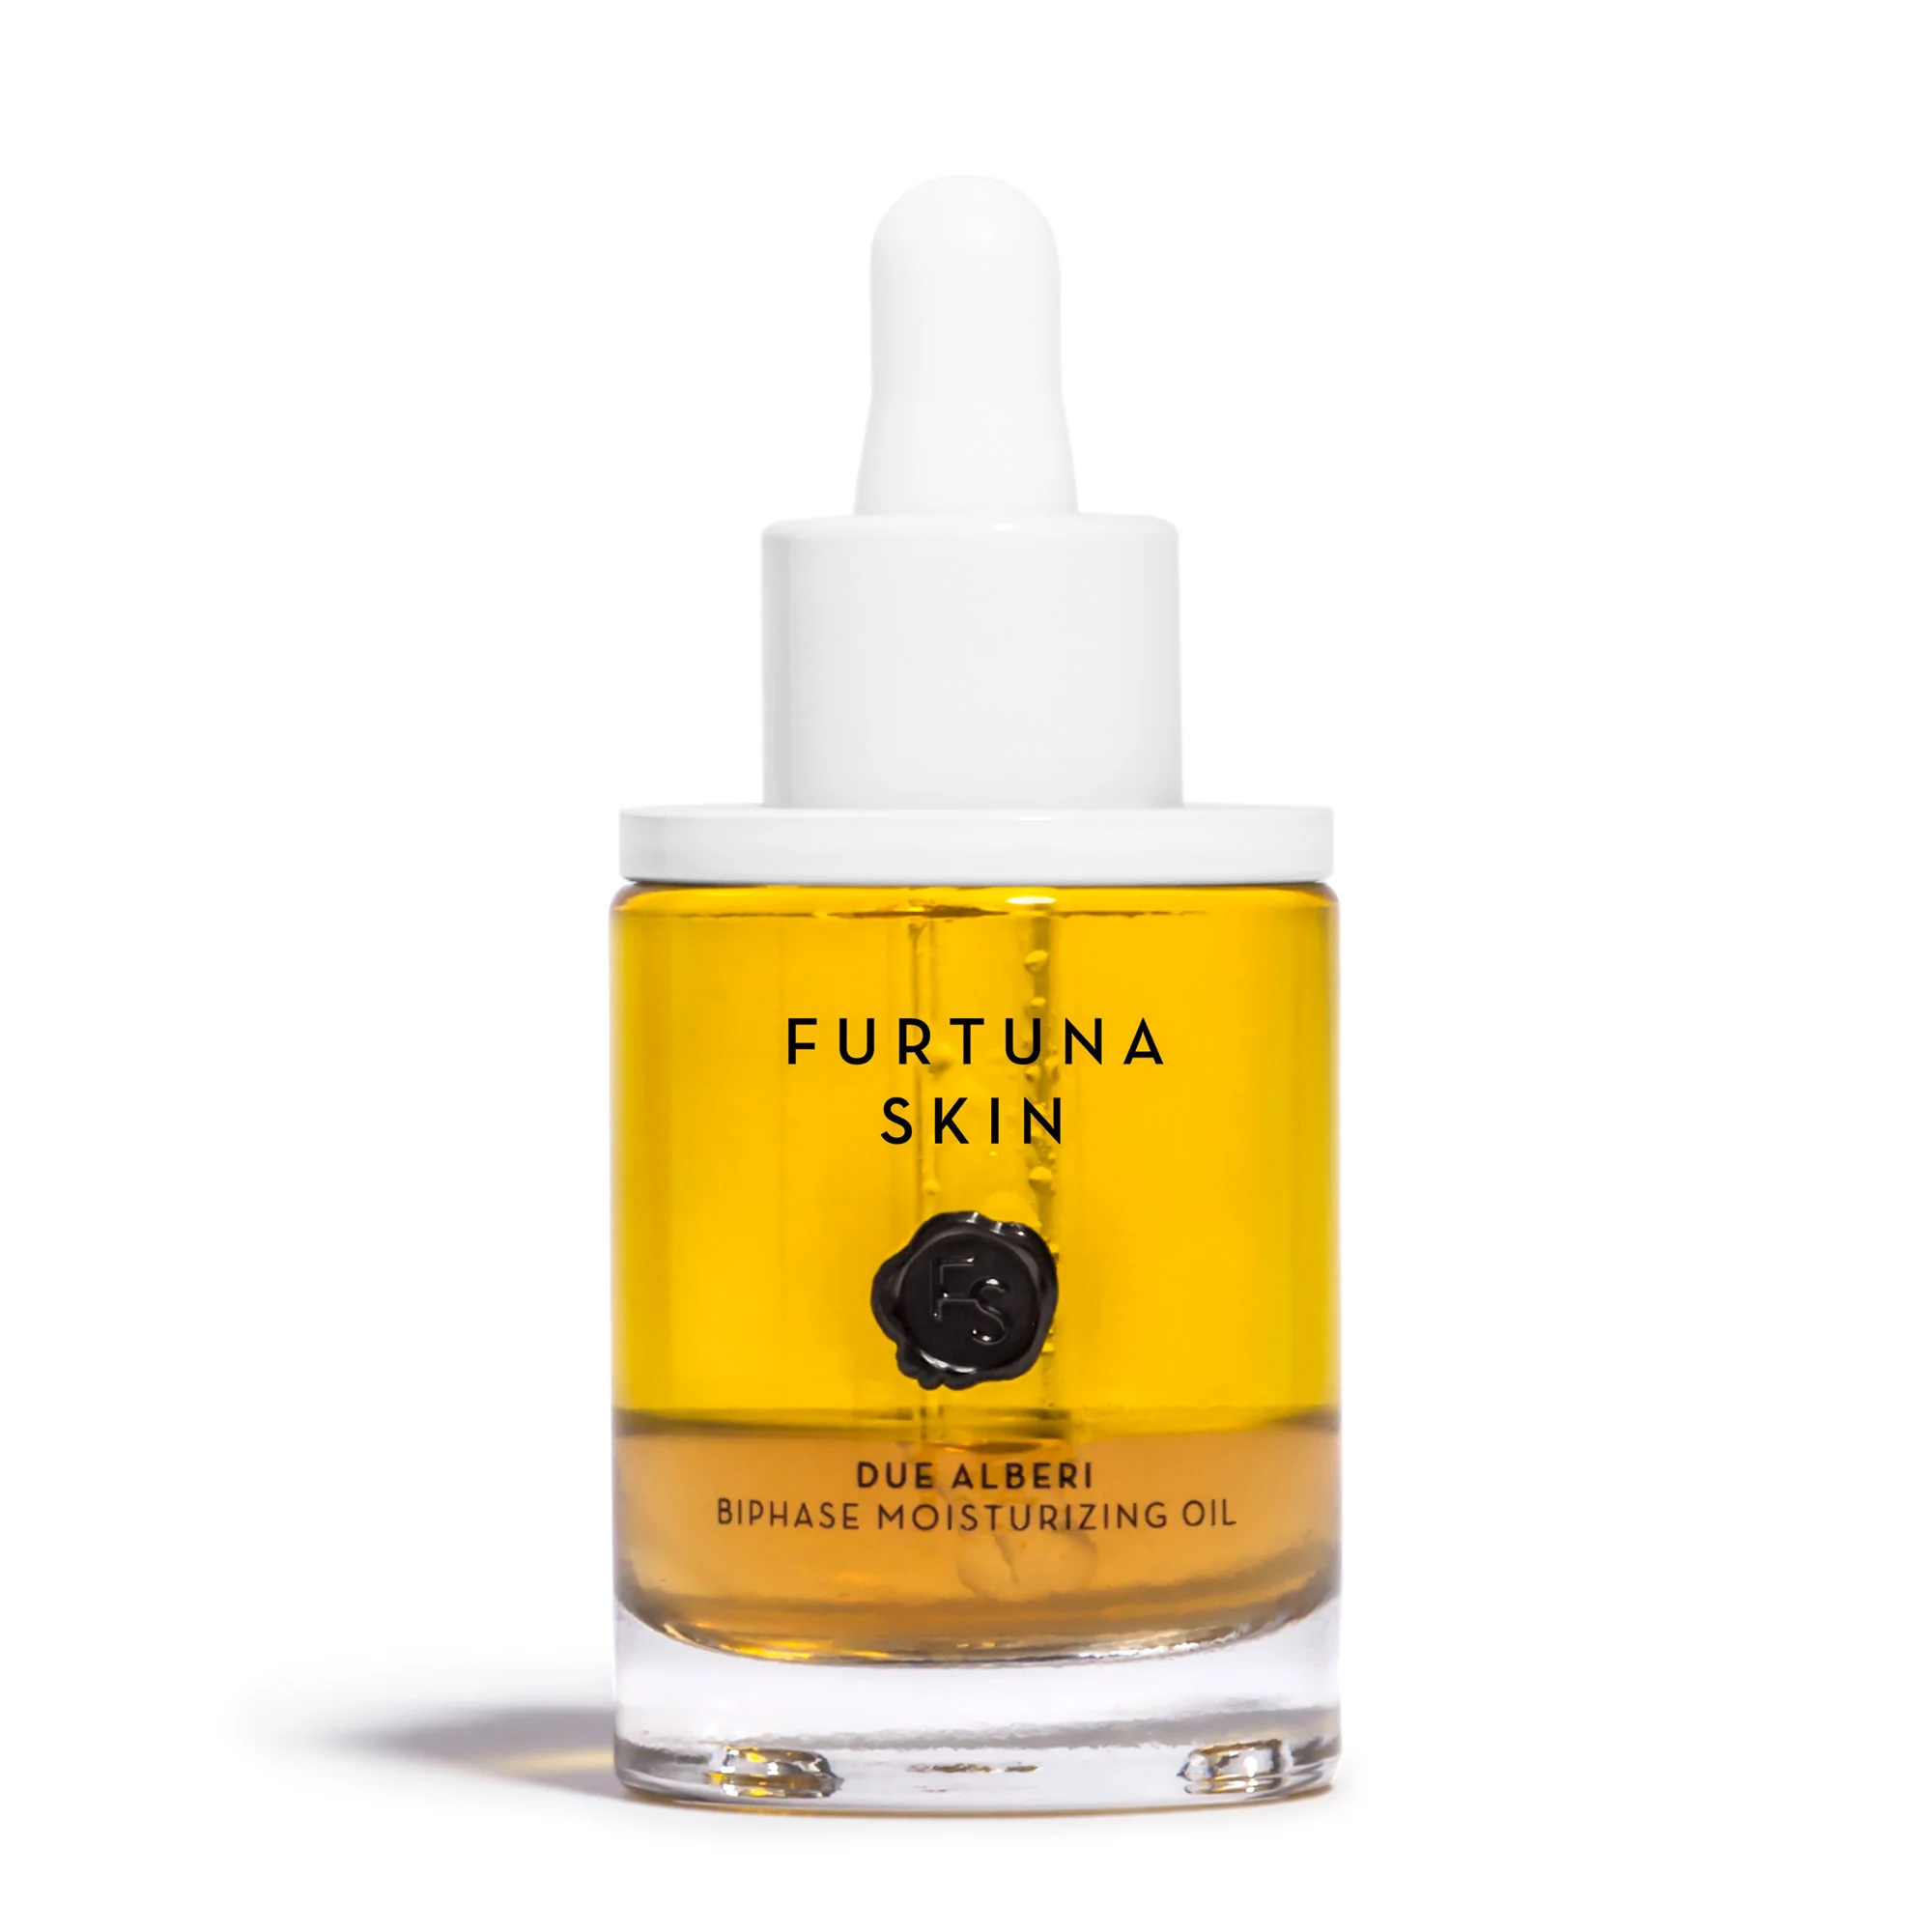 Futuna skin biphase moisturizing oil